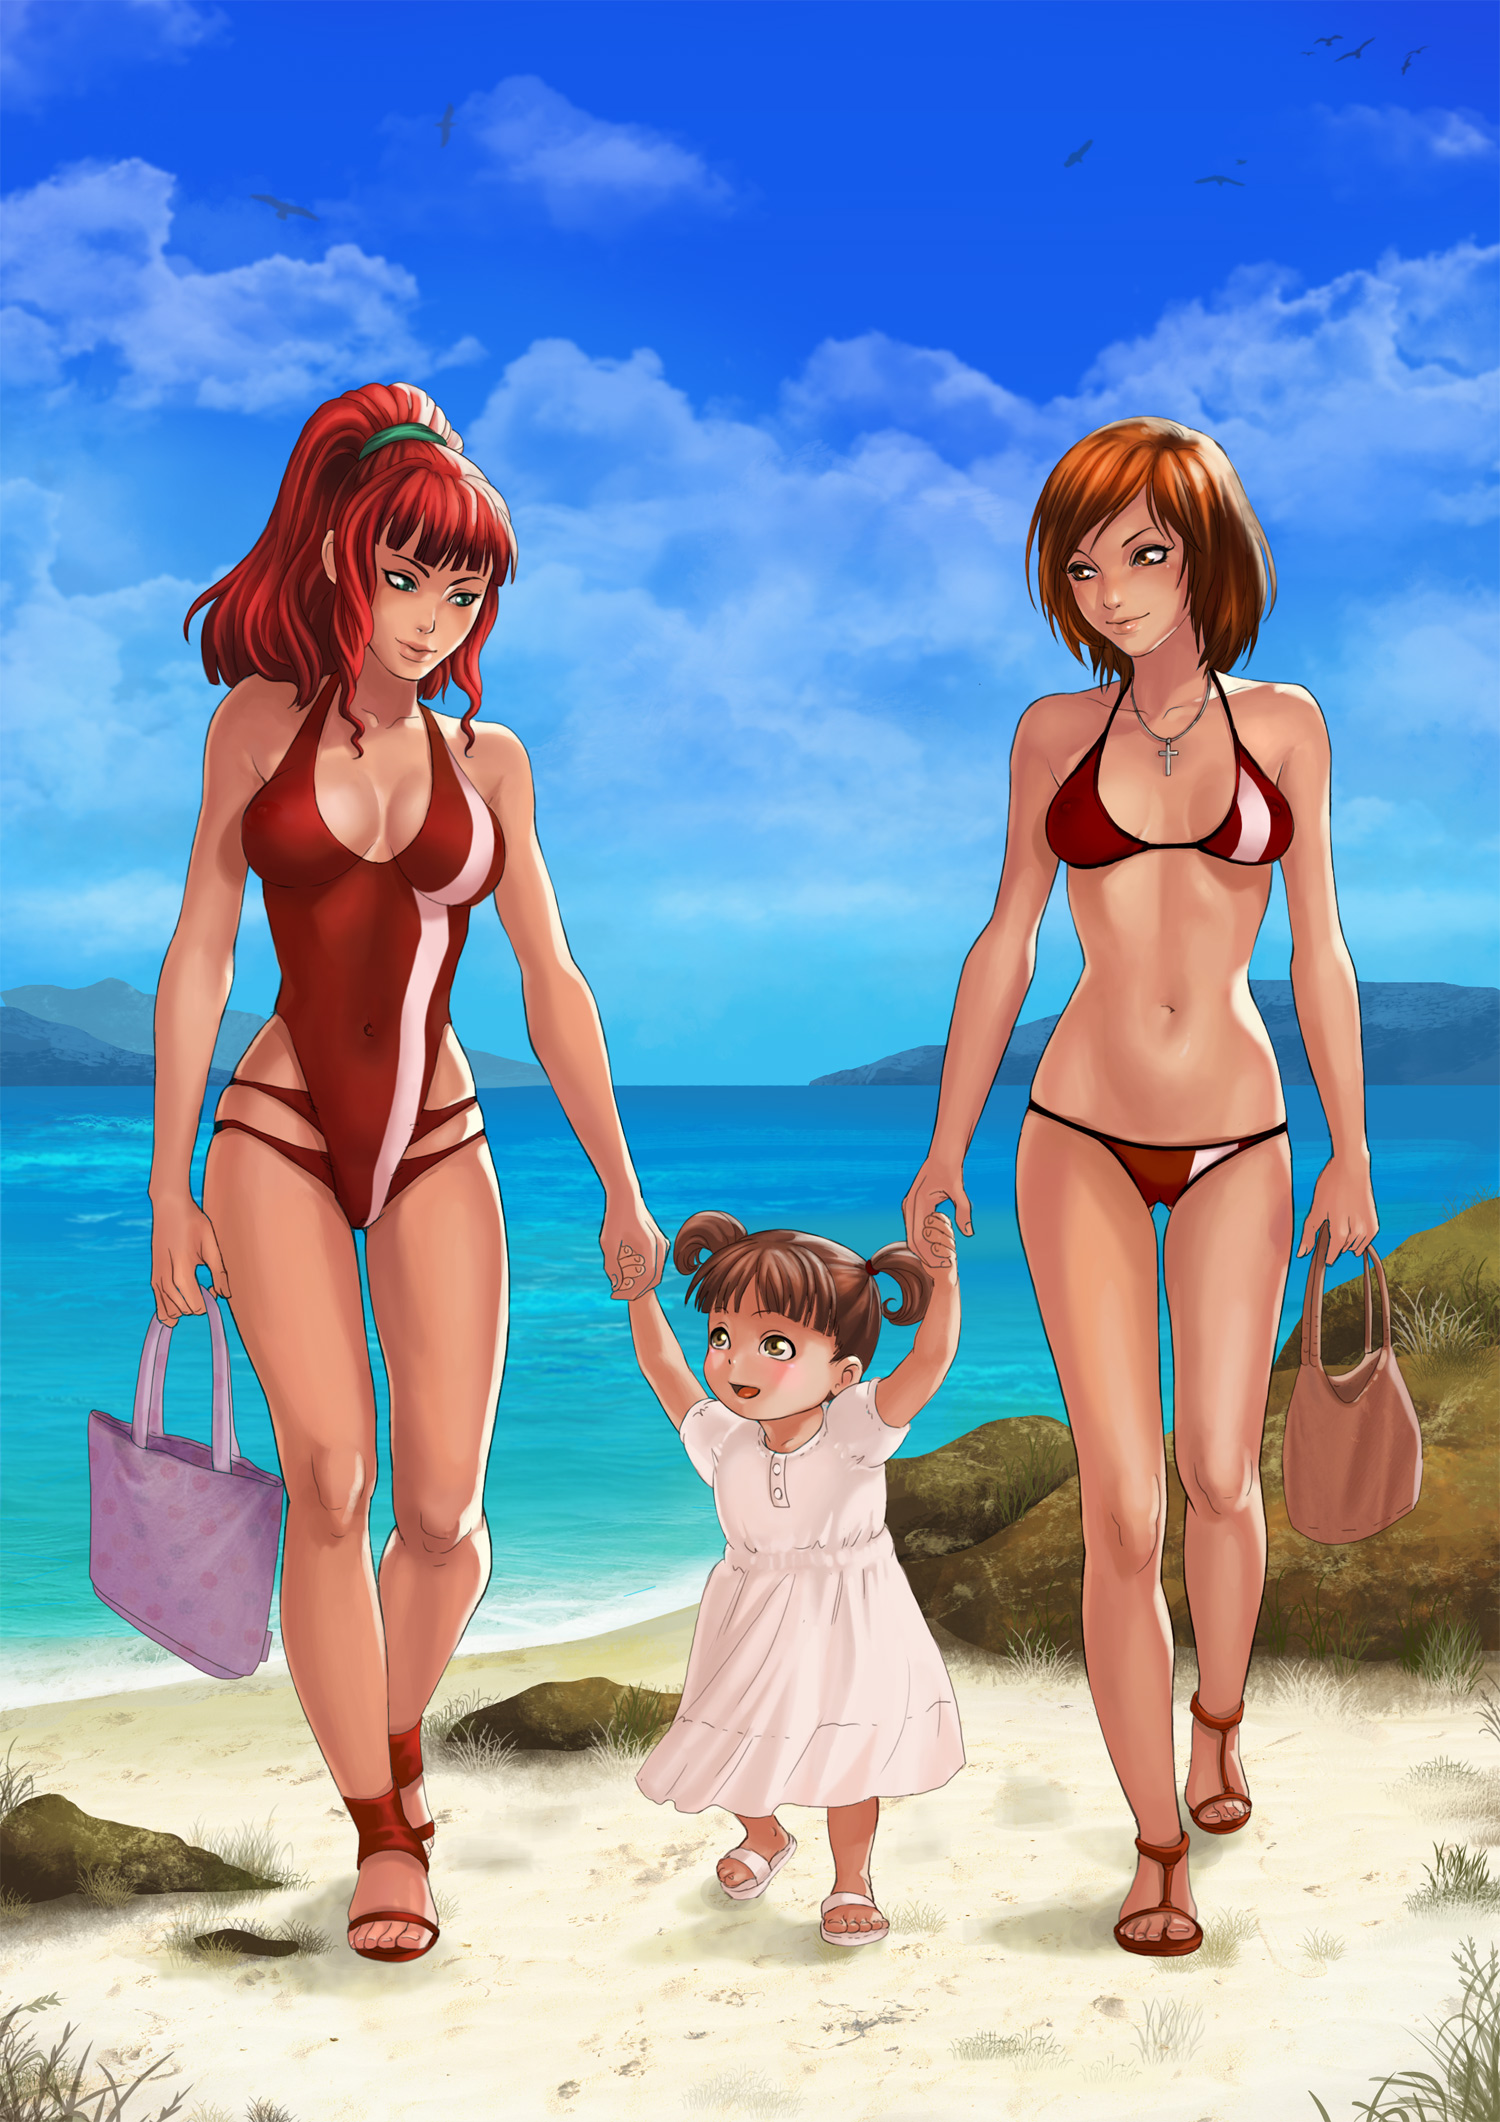 Футанари мама комиксы. Футанари на пляже в купальнике.